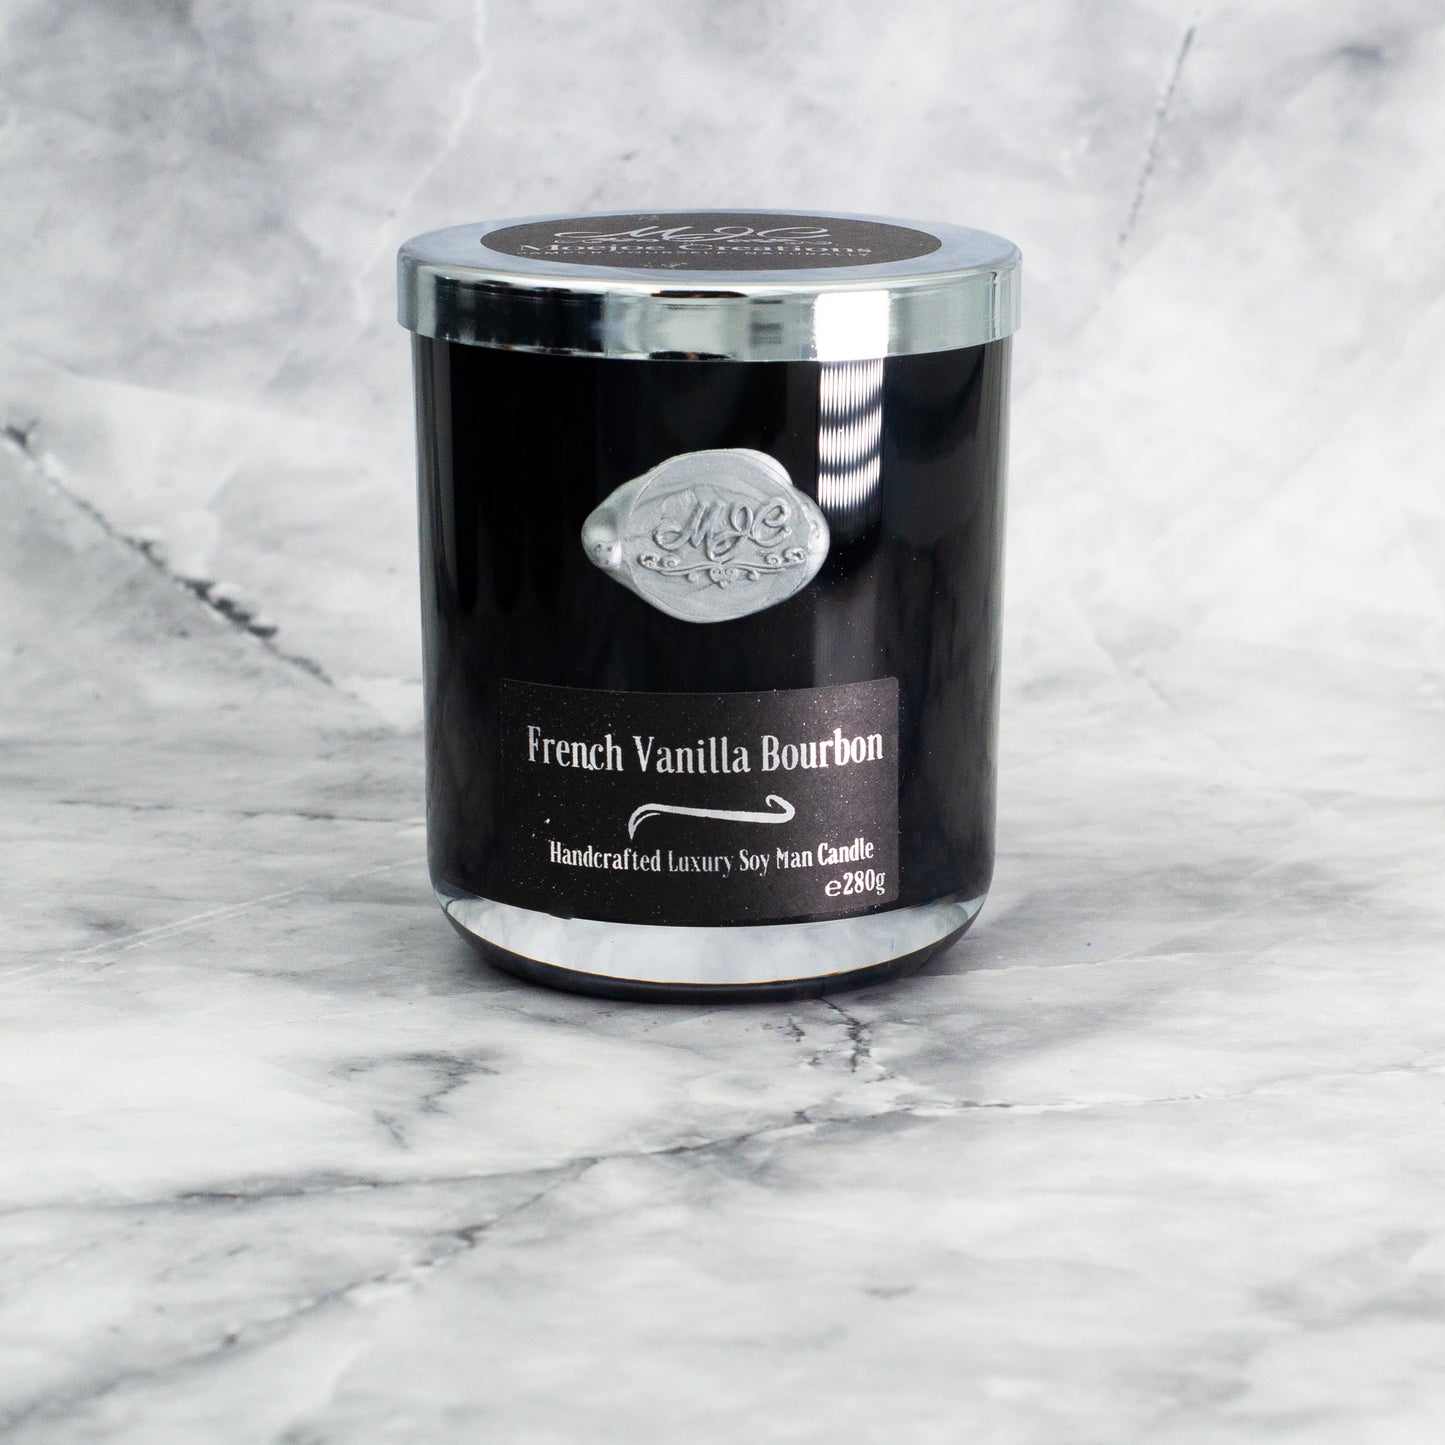 French Vanilla Bourbon Fragrance Man Candle in Large Black Tumbler 285g/10oz